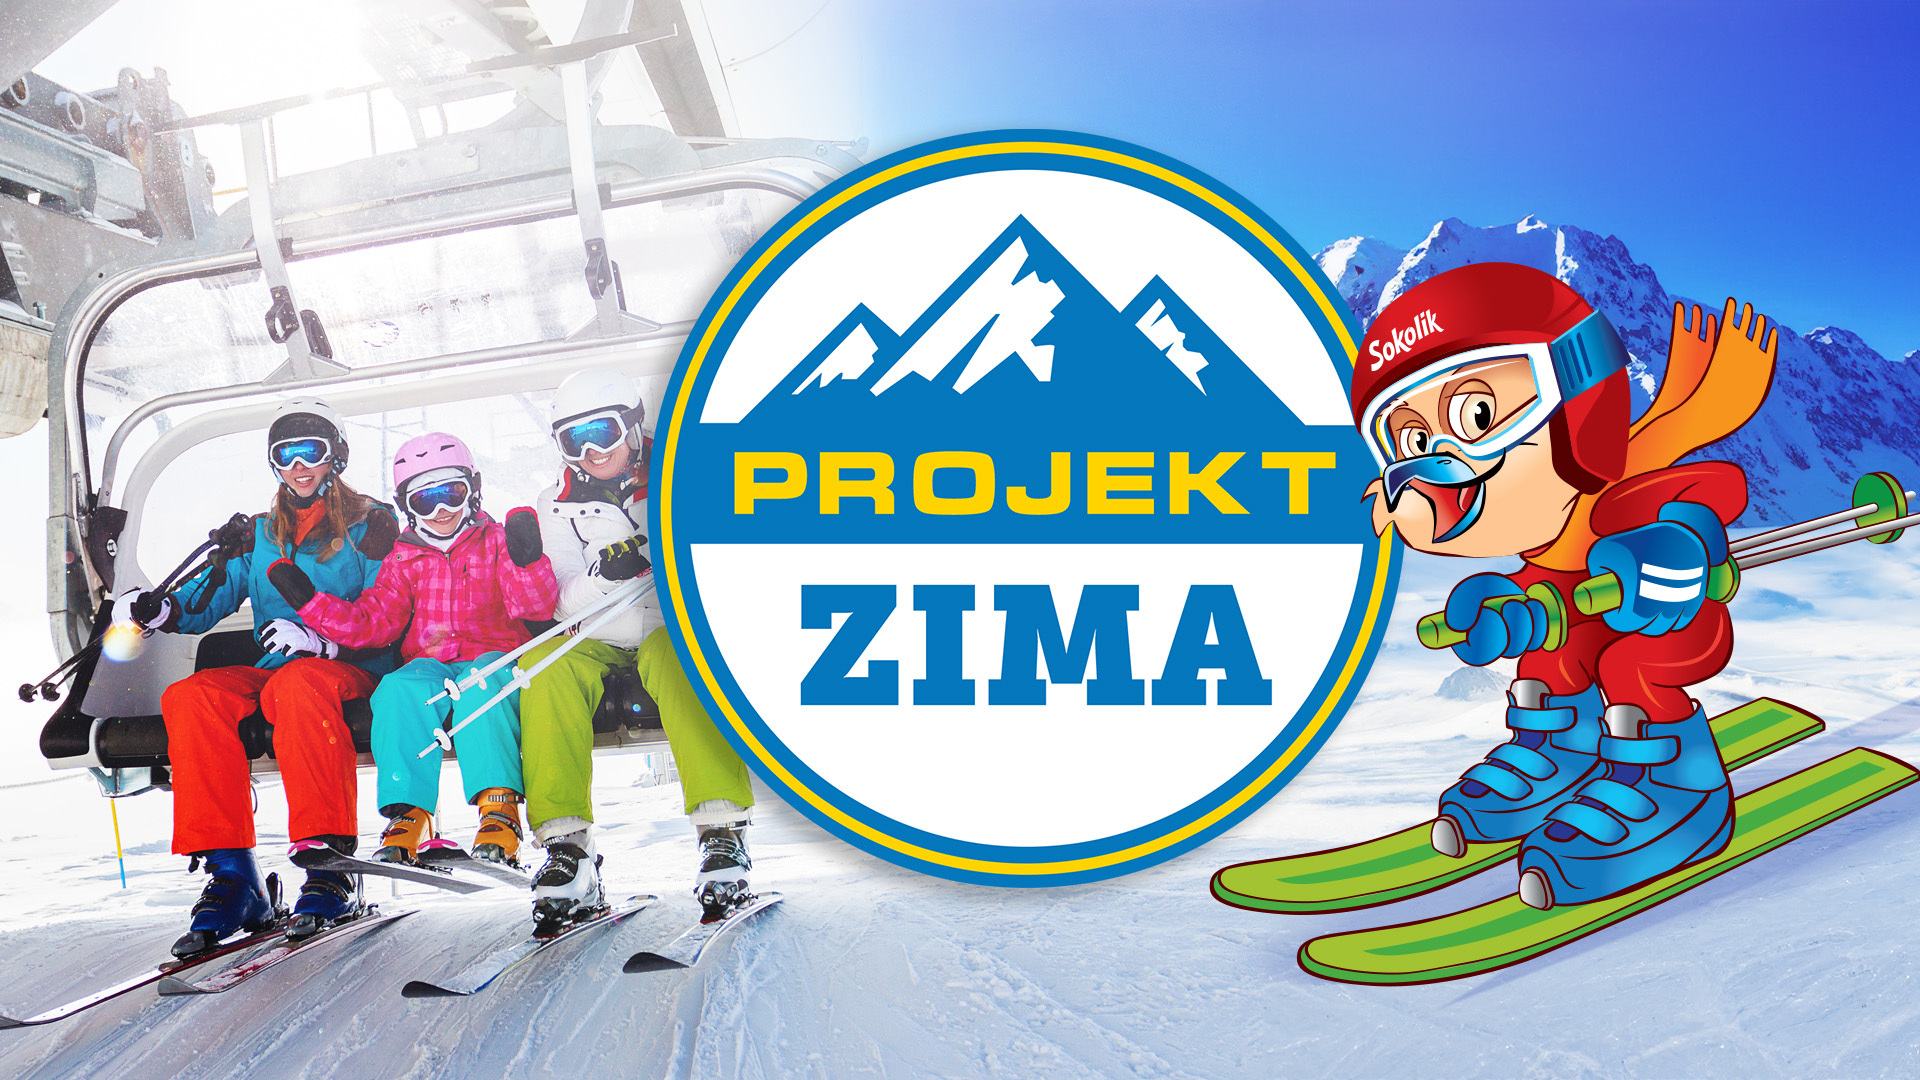 Another edition of the Projekt Zima with Sokołów!